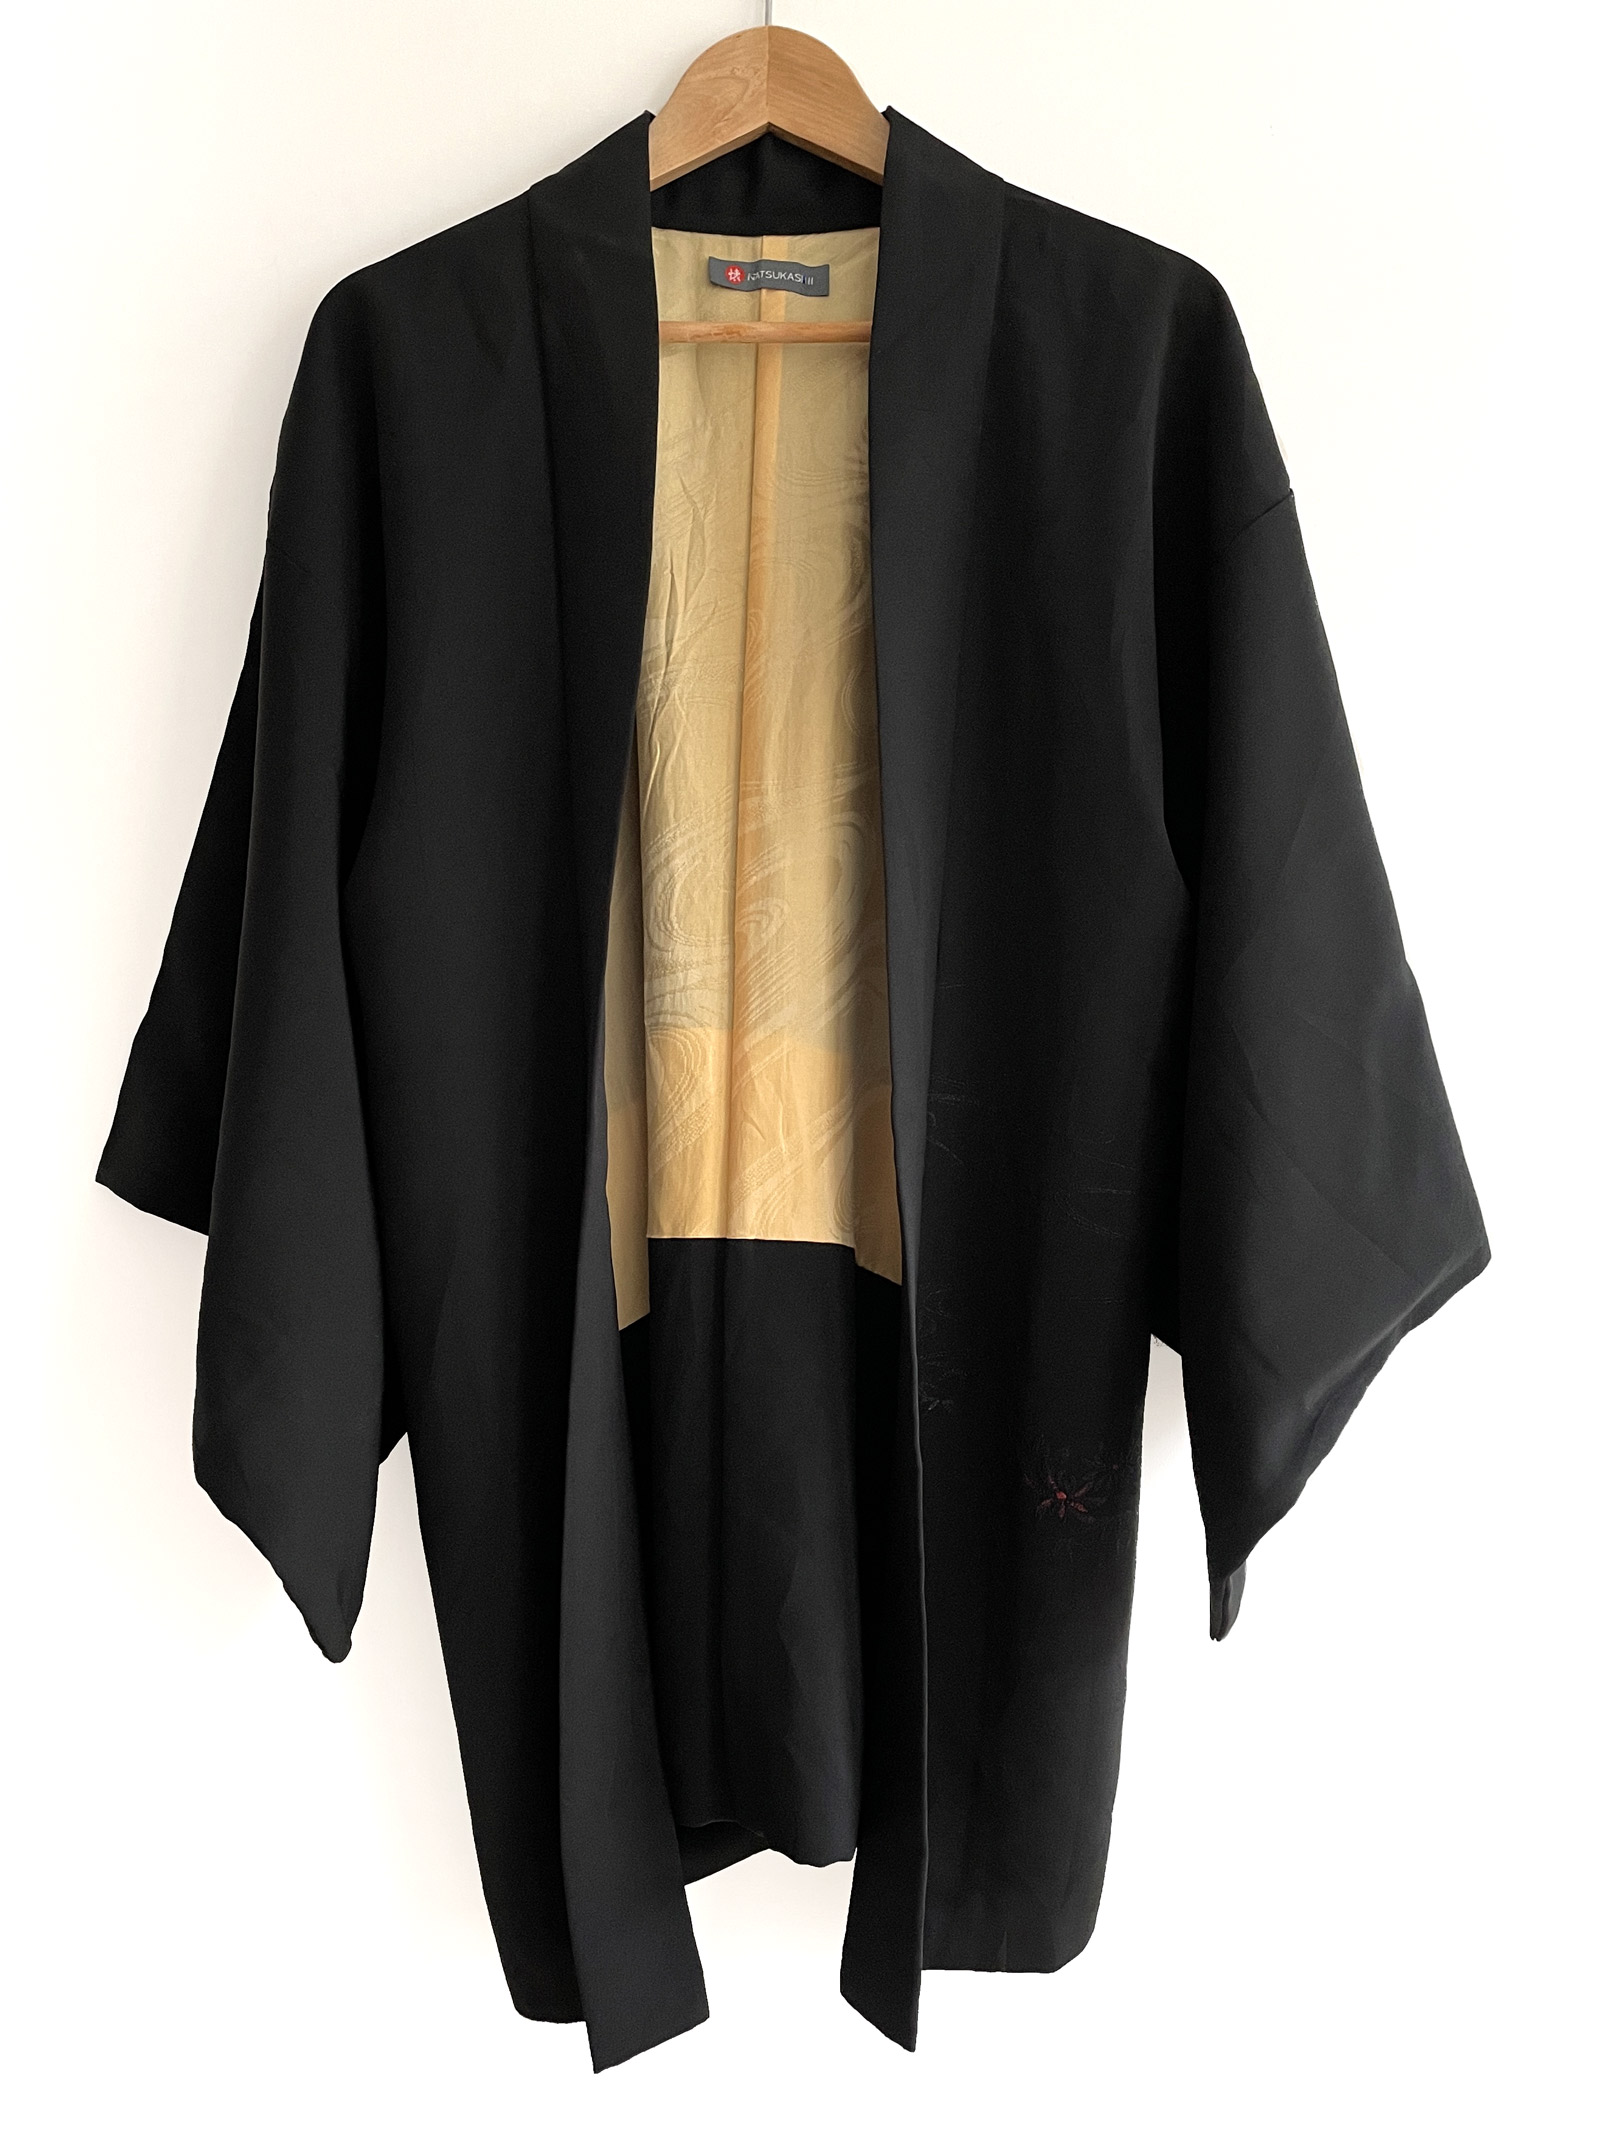 Sensai – chic Kimono jacket with subtle shiny details